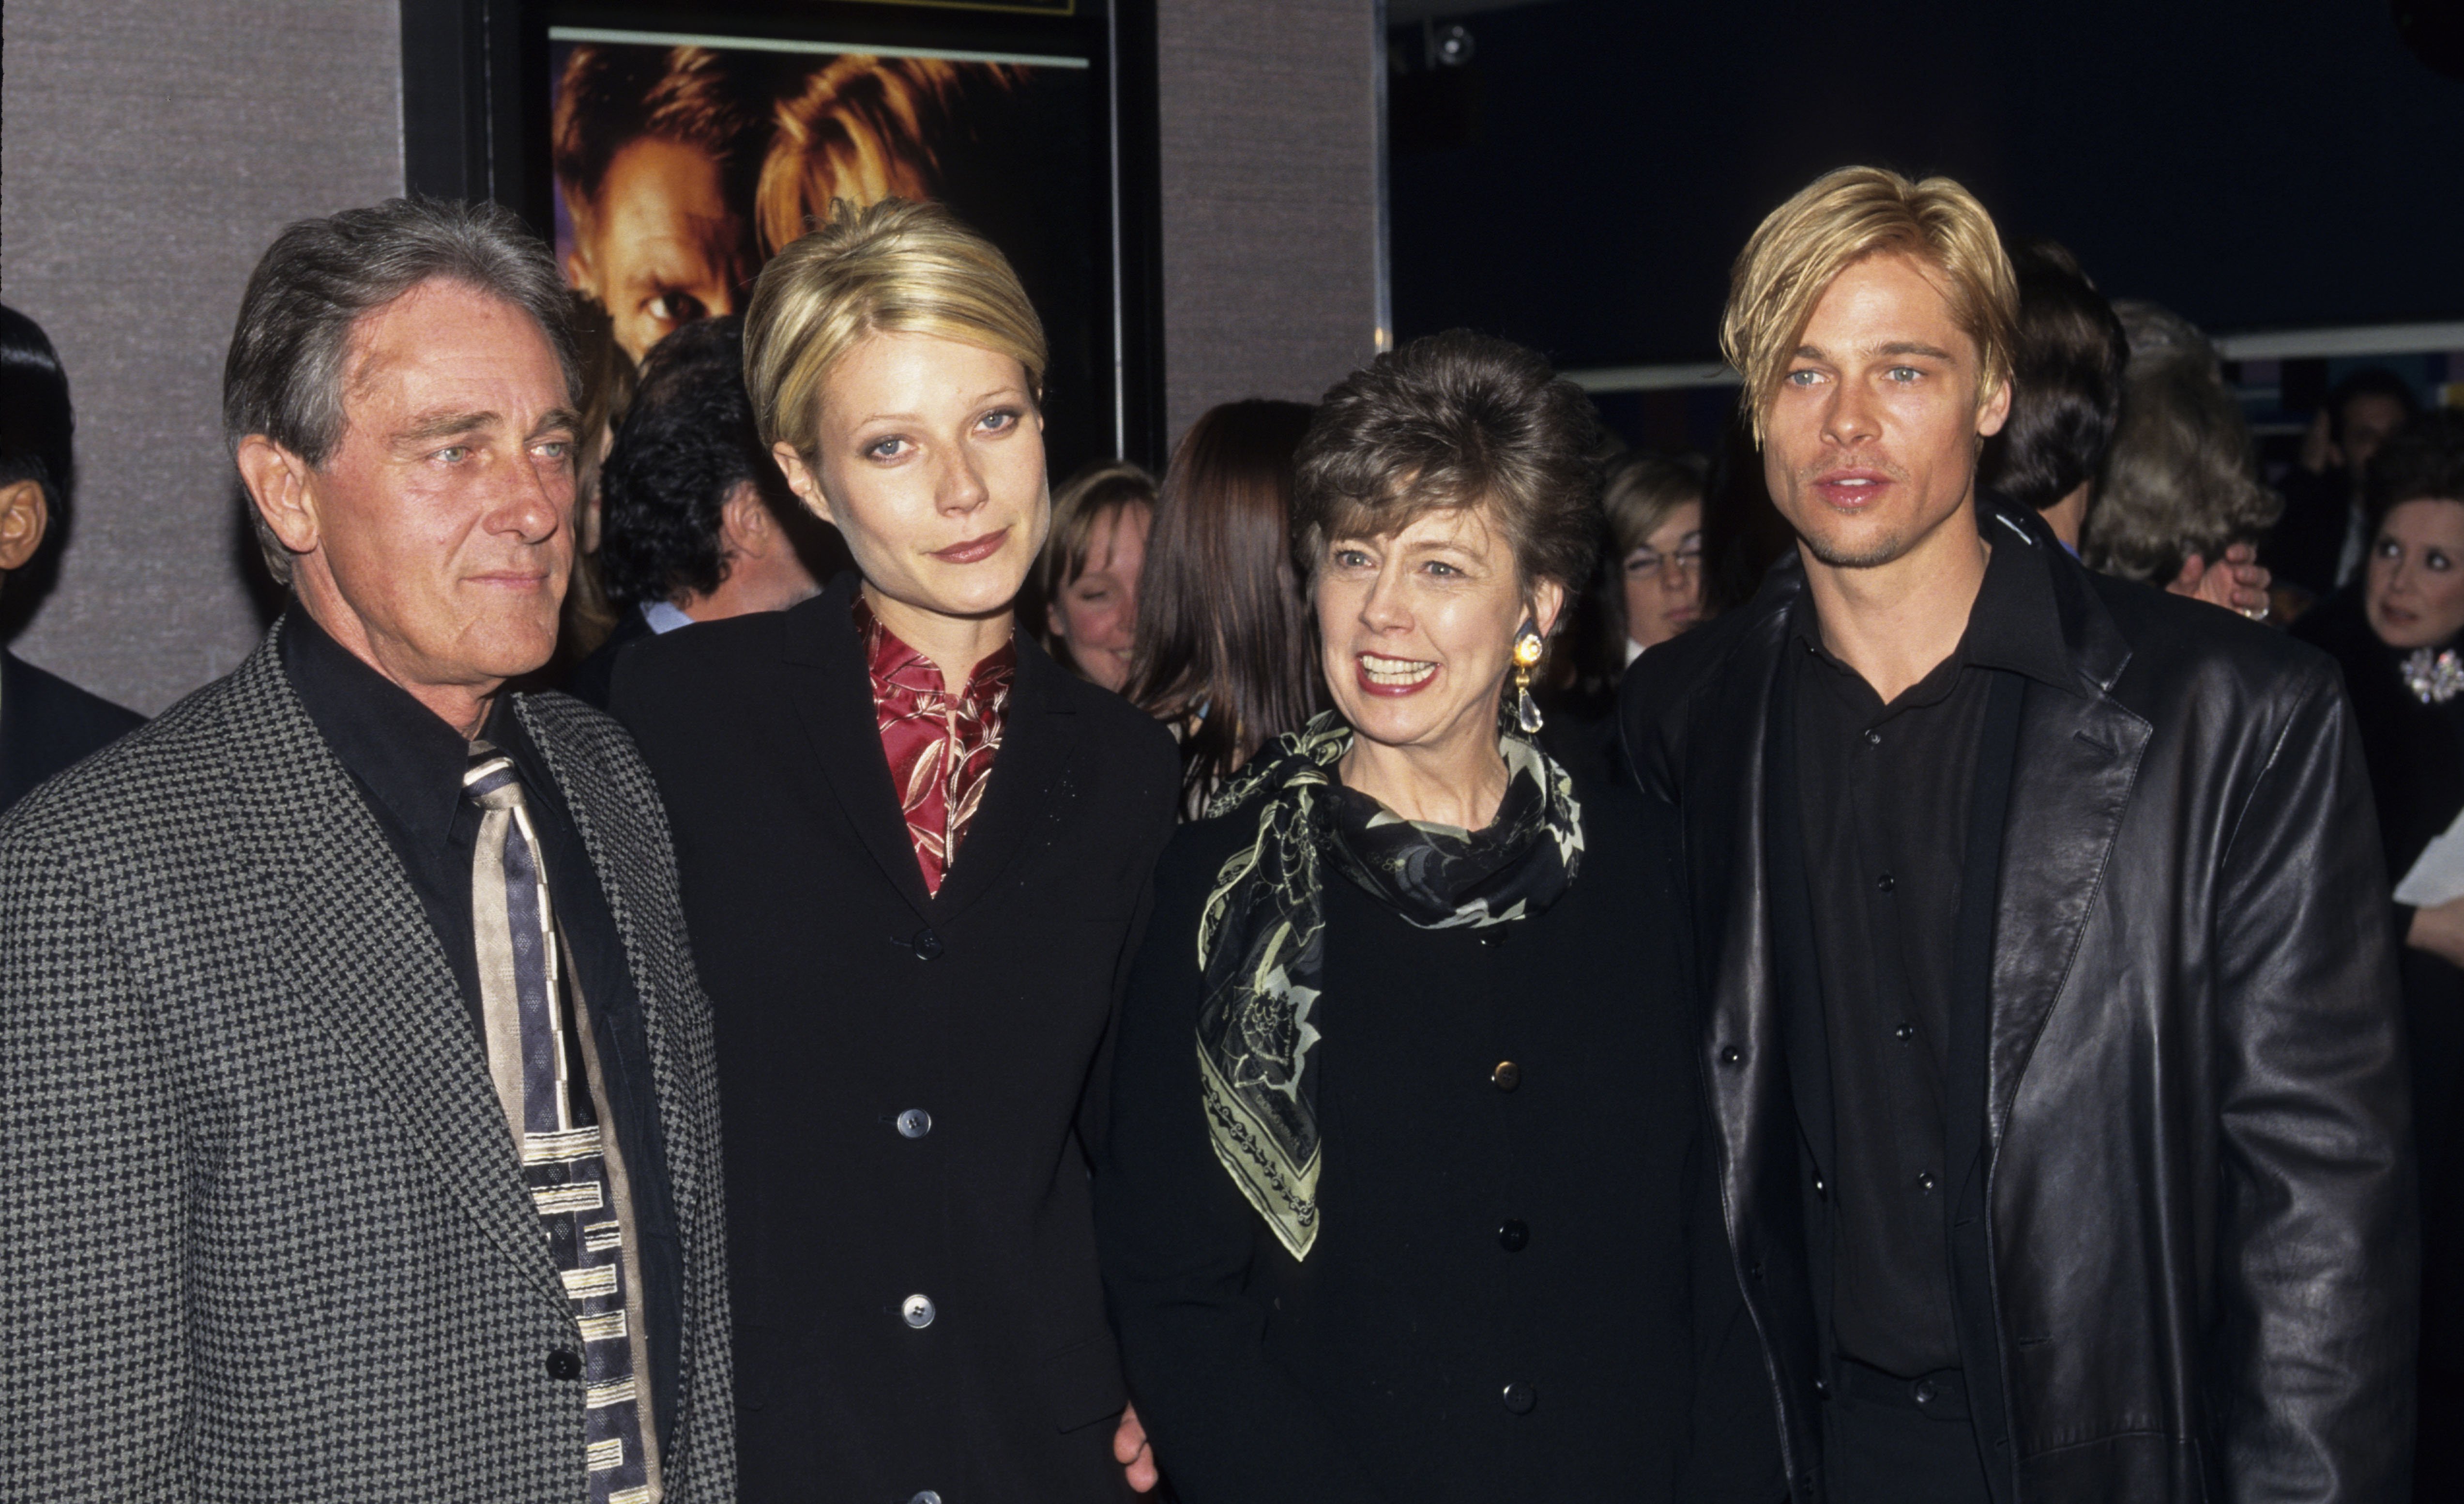 Gwyneth Paltrow, Brad Pitt, los padres de Brad Pitt, William y Jane Pitt, asisten al estreno de "The Devil's Own" en 1997. | Foto: Getty Images